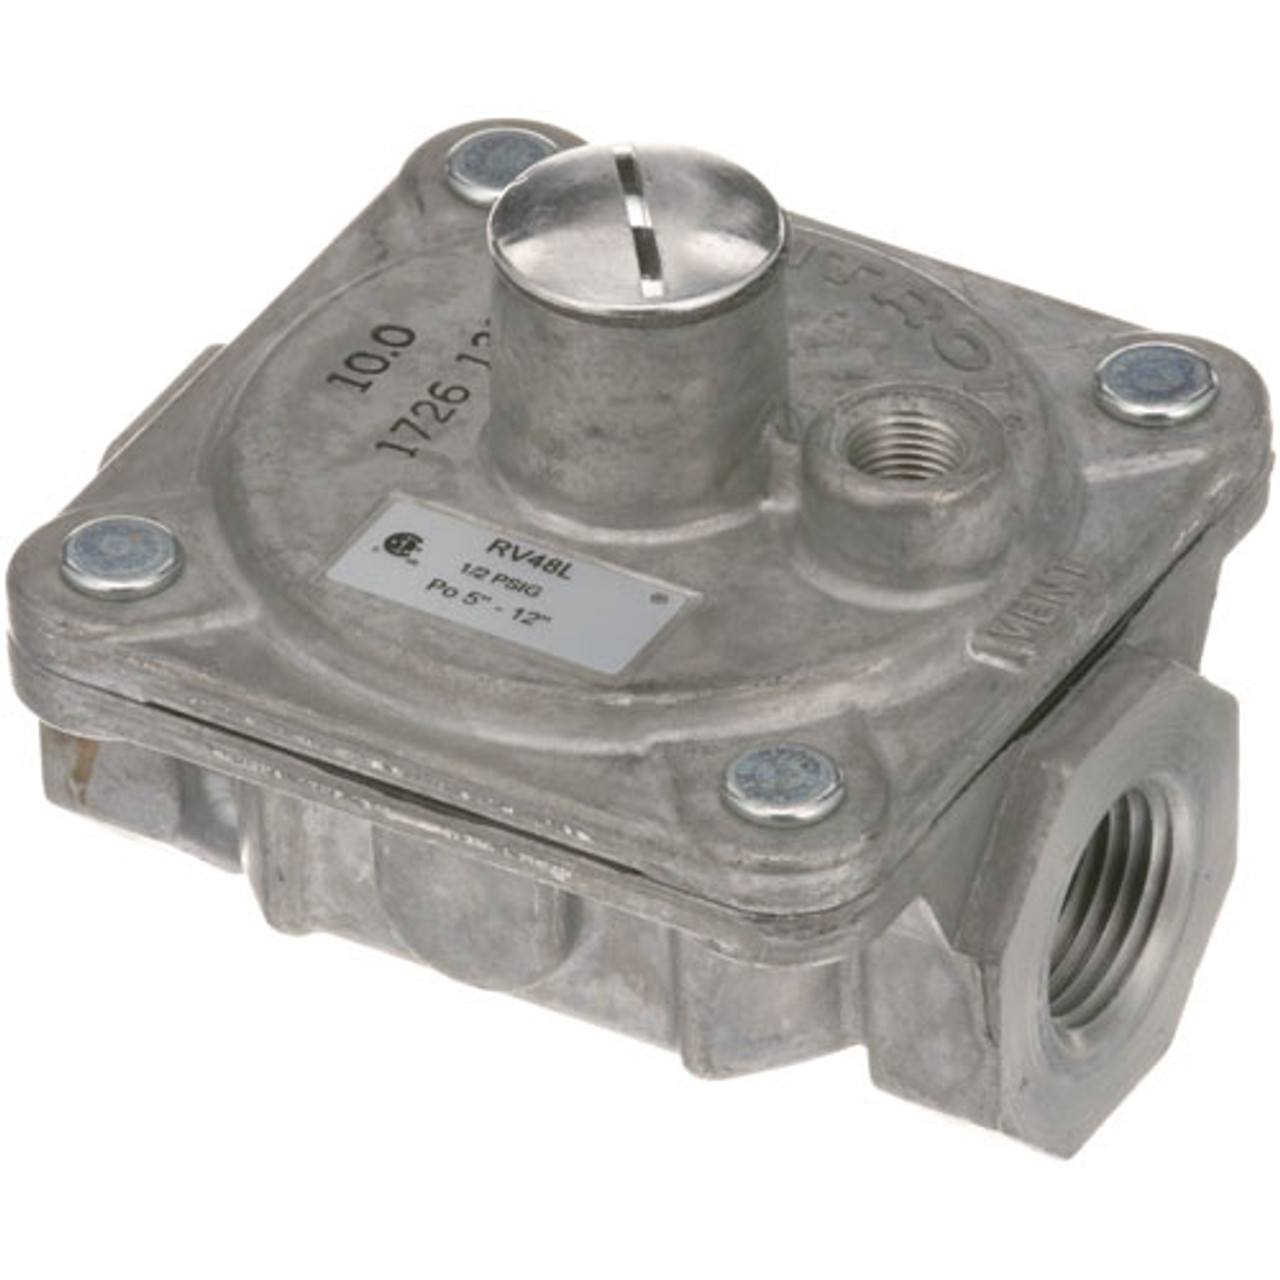 Pressure Regulator 1/2" Lp - Replacement Part For Randell HD GAS802